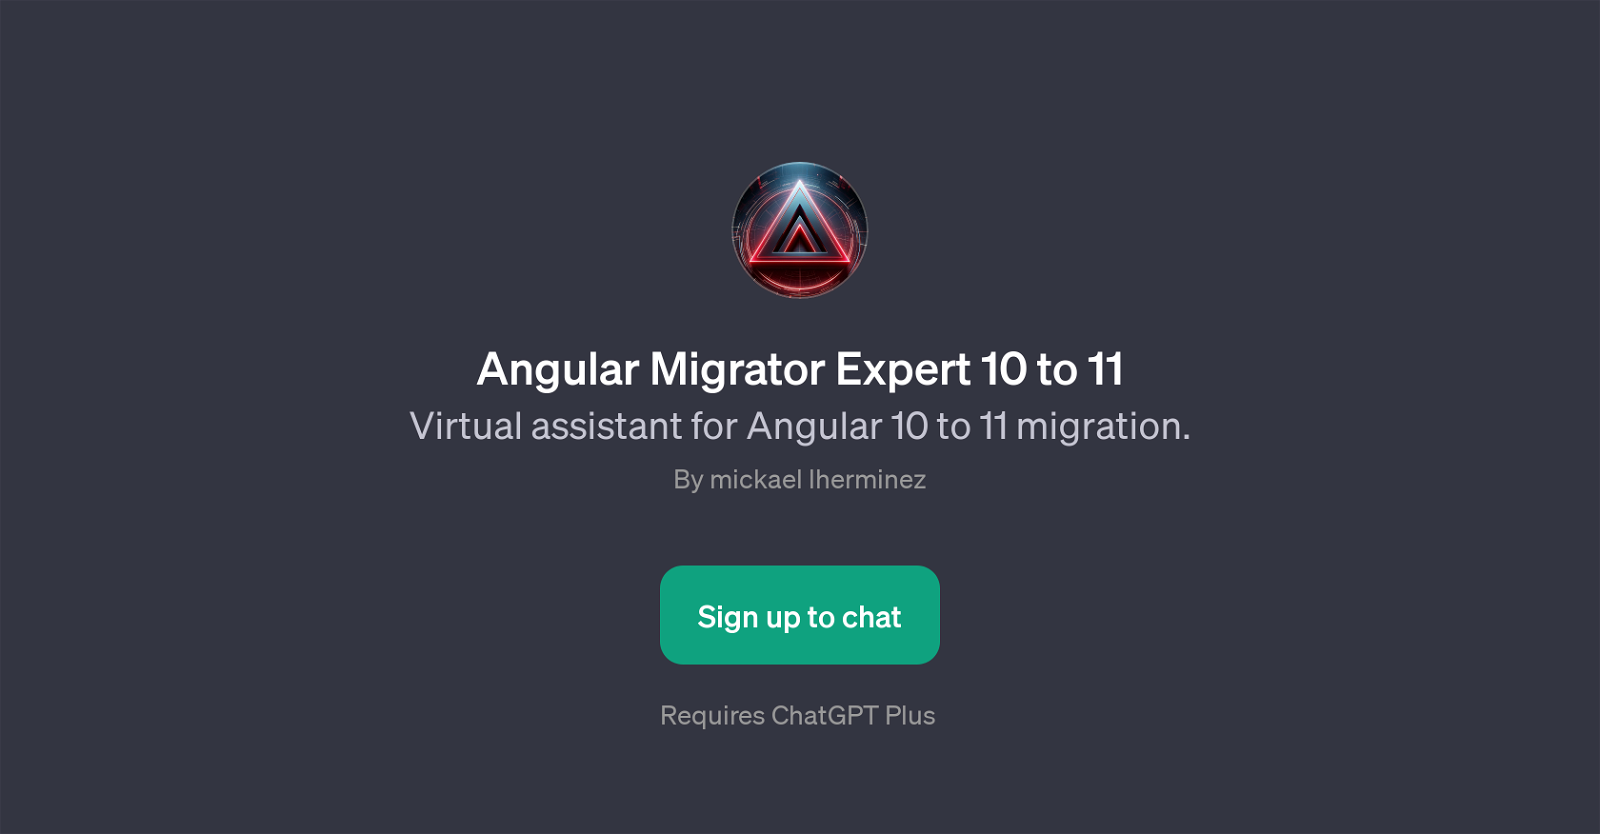 Angular Migrator Expert 10 to 11 website